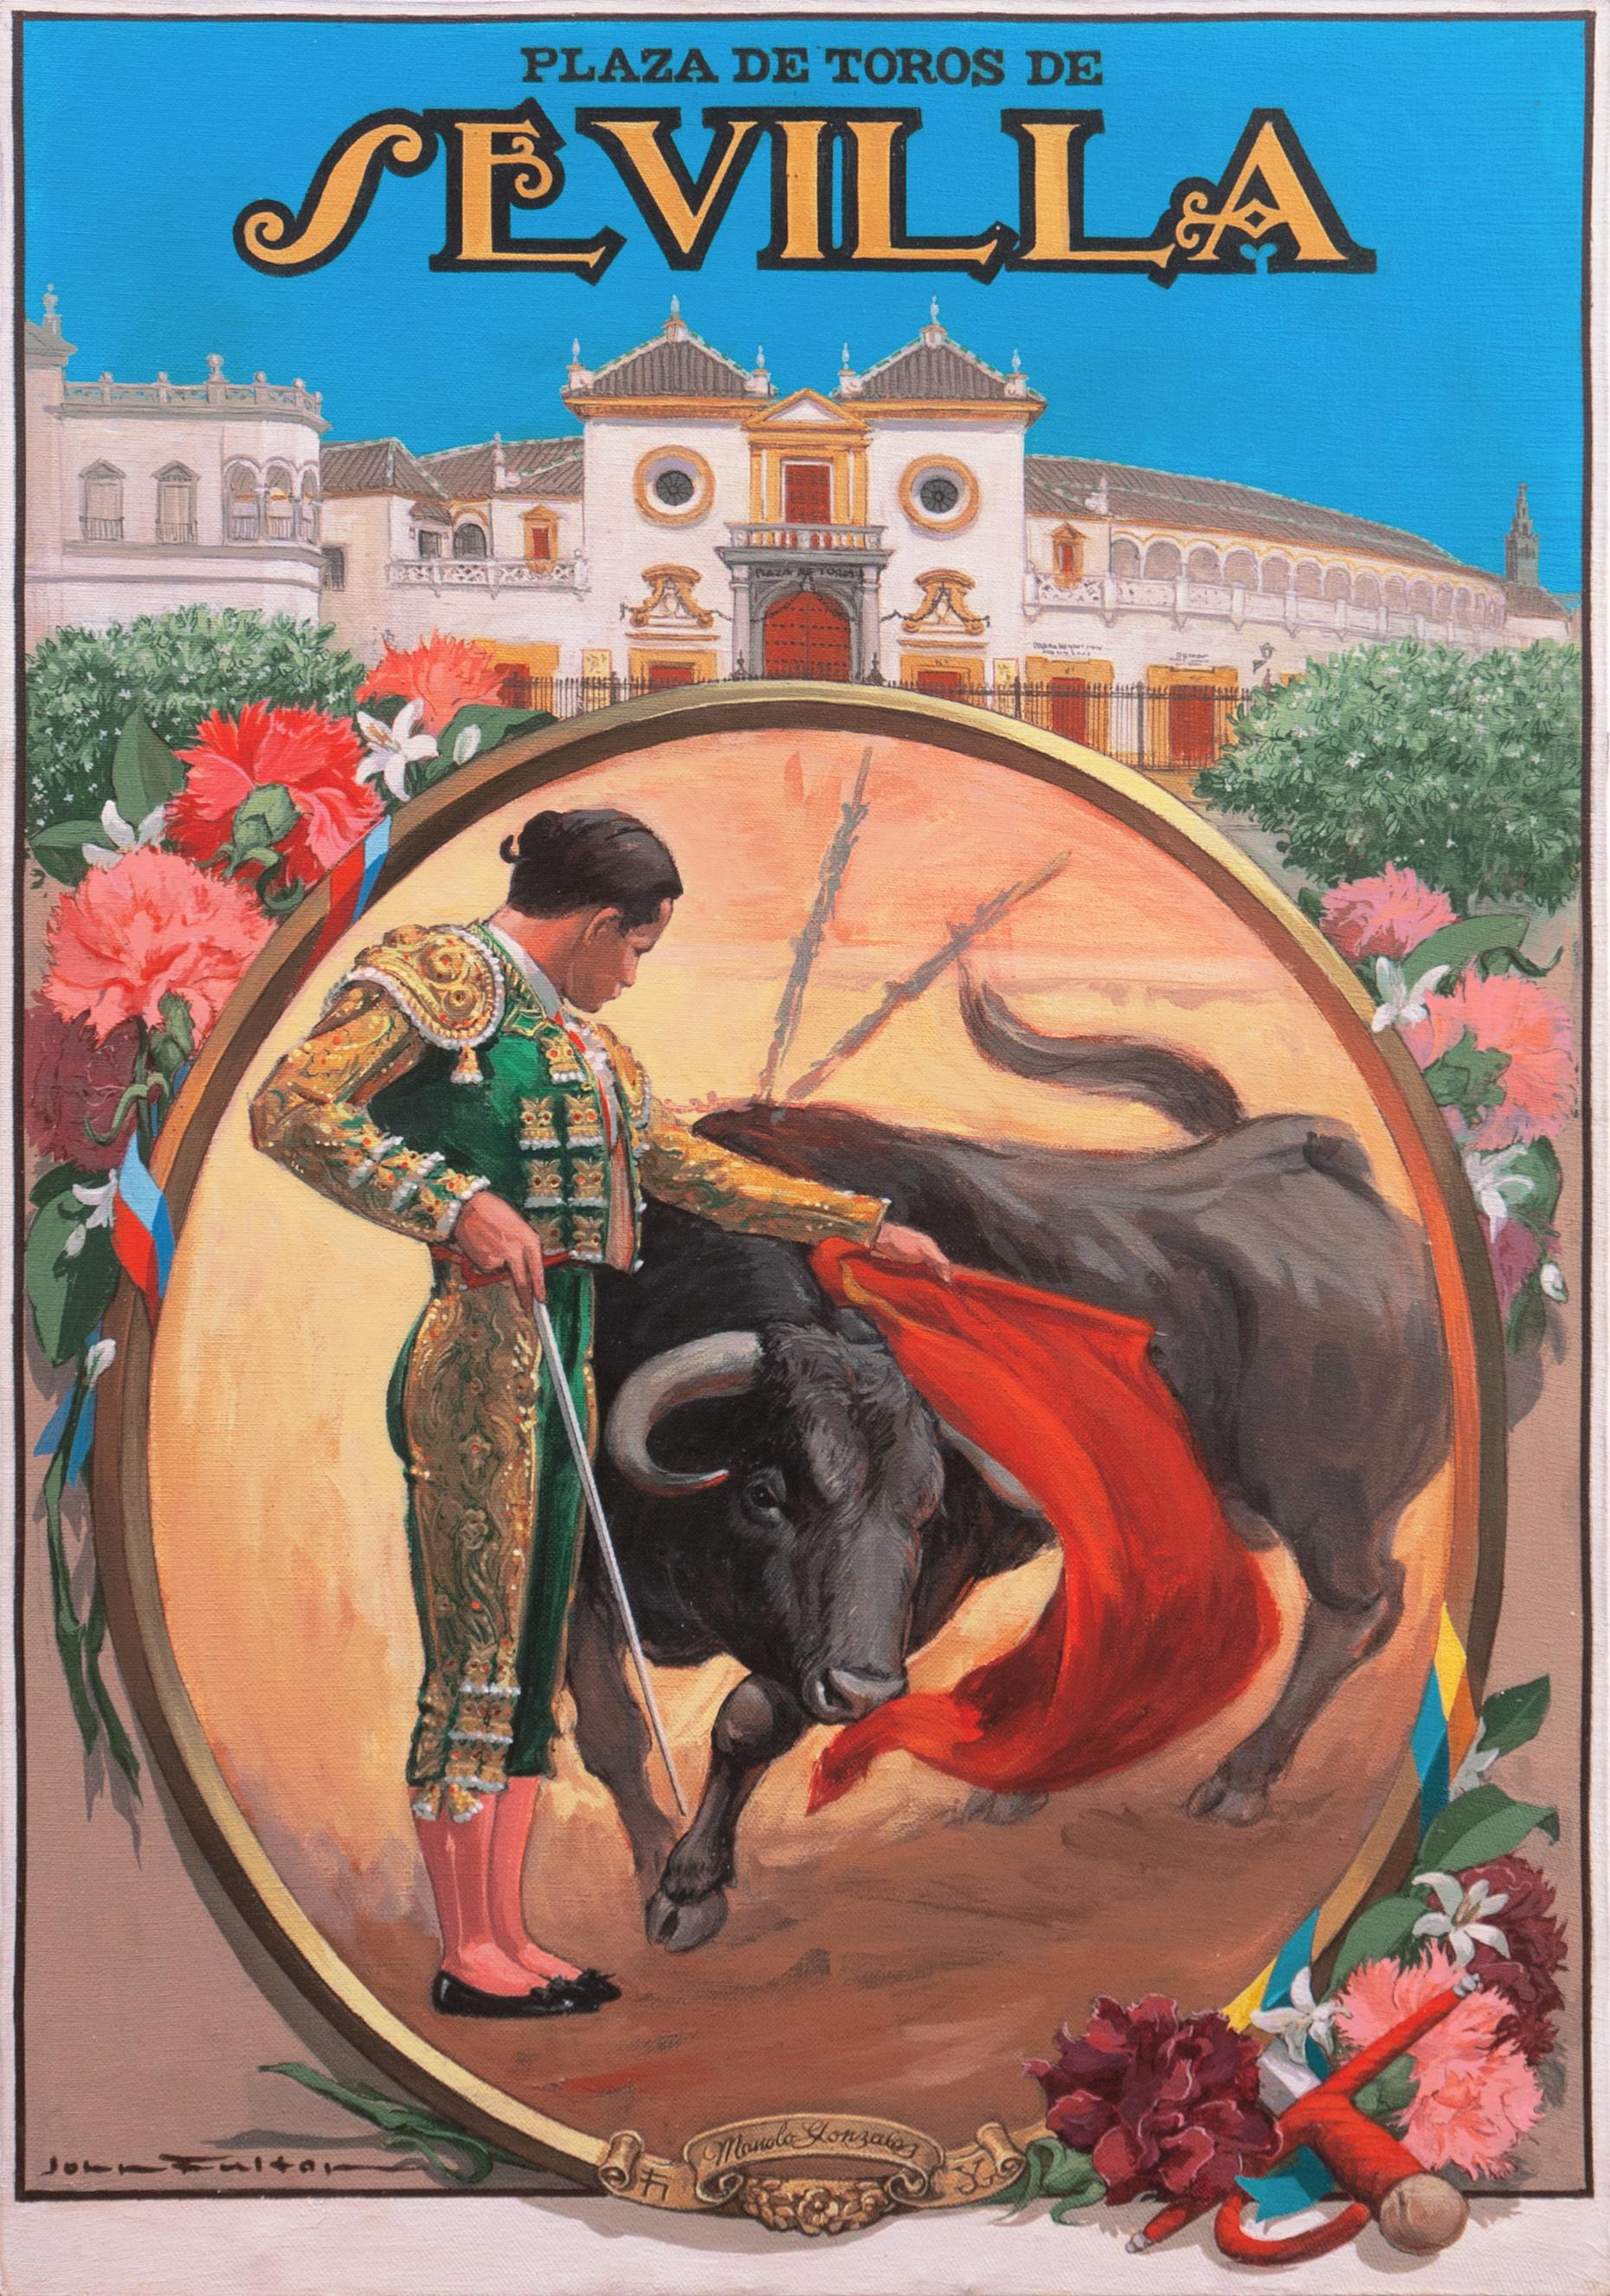 John Fulton Portrait Painting - 'Manolo Gonzalez' Plaza de Toros, Maestranza, Seville, Bullfighting, Matador